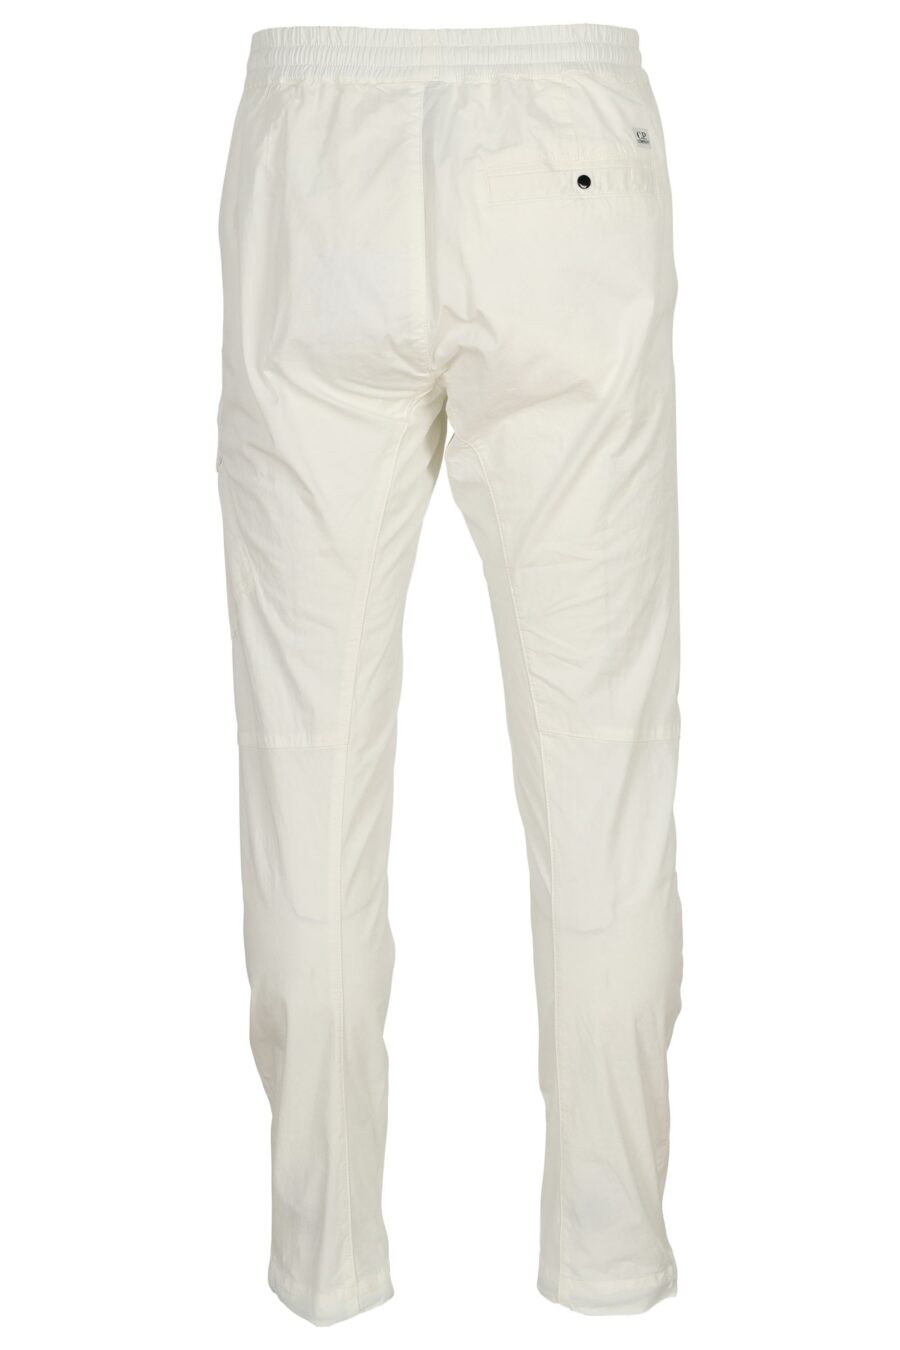 Pantalon cargo blanc avec mini-logo en lentille - 7620943804751 2